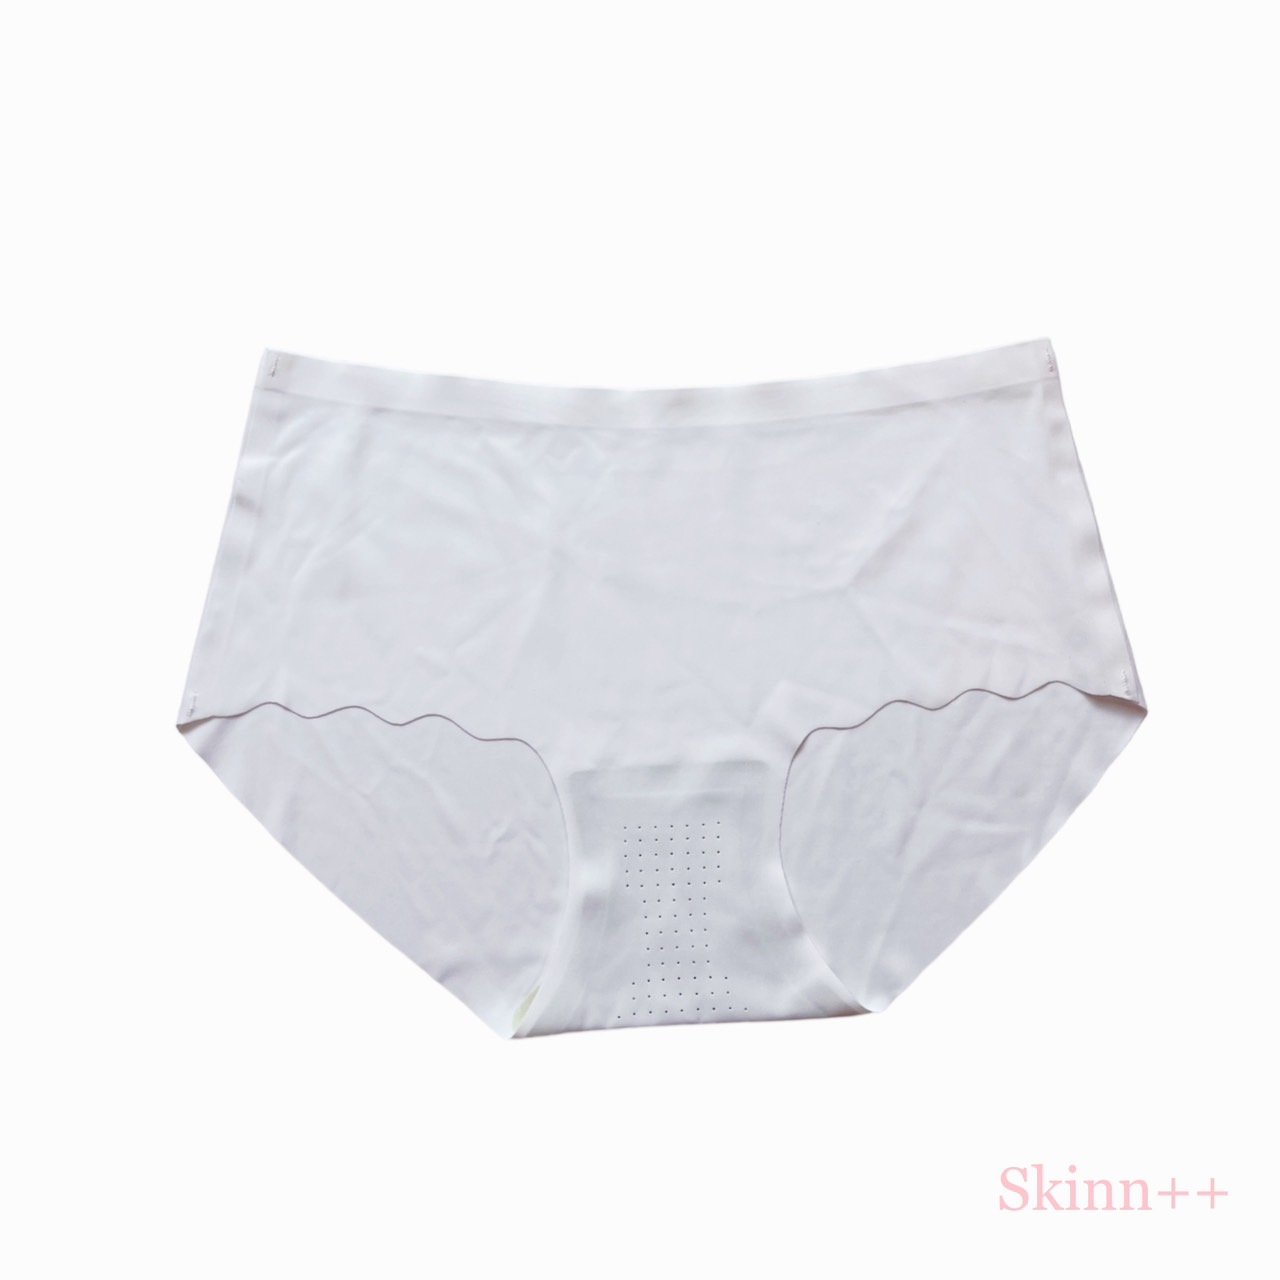 Seamless Panty by Skinn Intimate